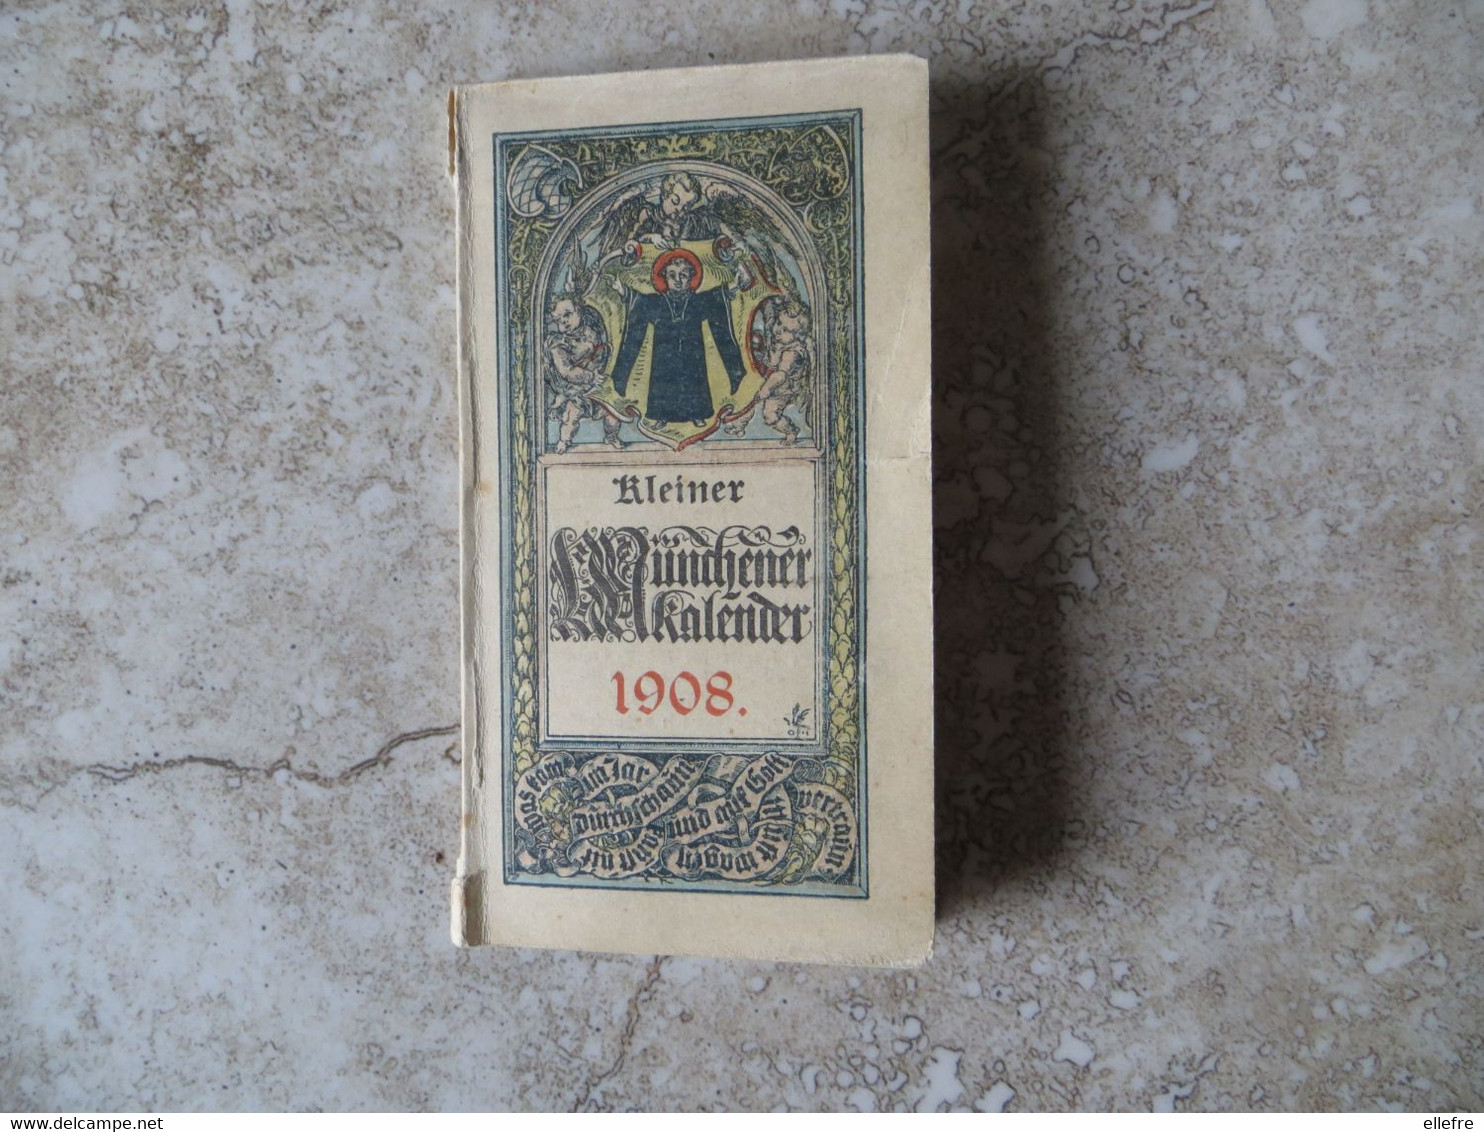 Calendrier 1908 Allemagne Kleiner Müchener Kalender  - Calendrier Avec Image Religieuse Et Lettre Gothique Calepin 14 Pa - Small : 1901-20